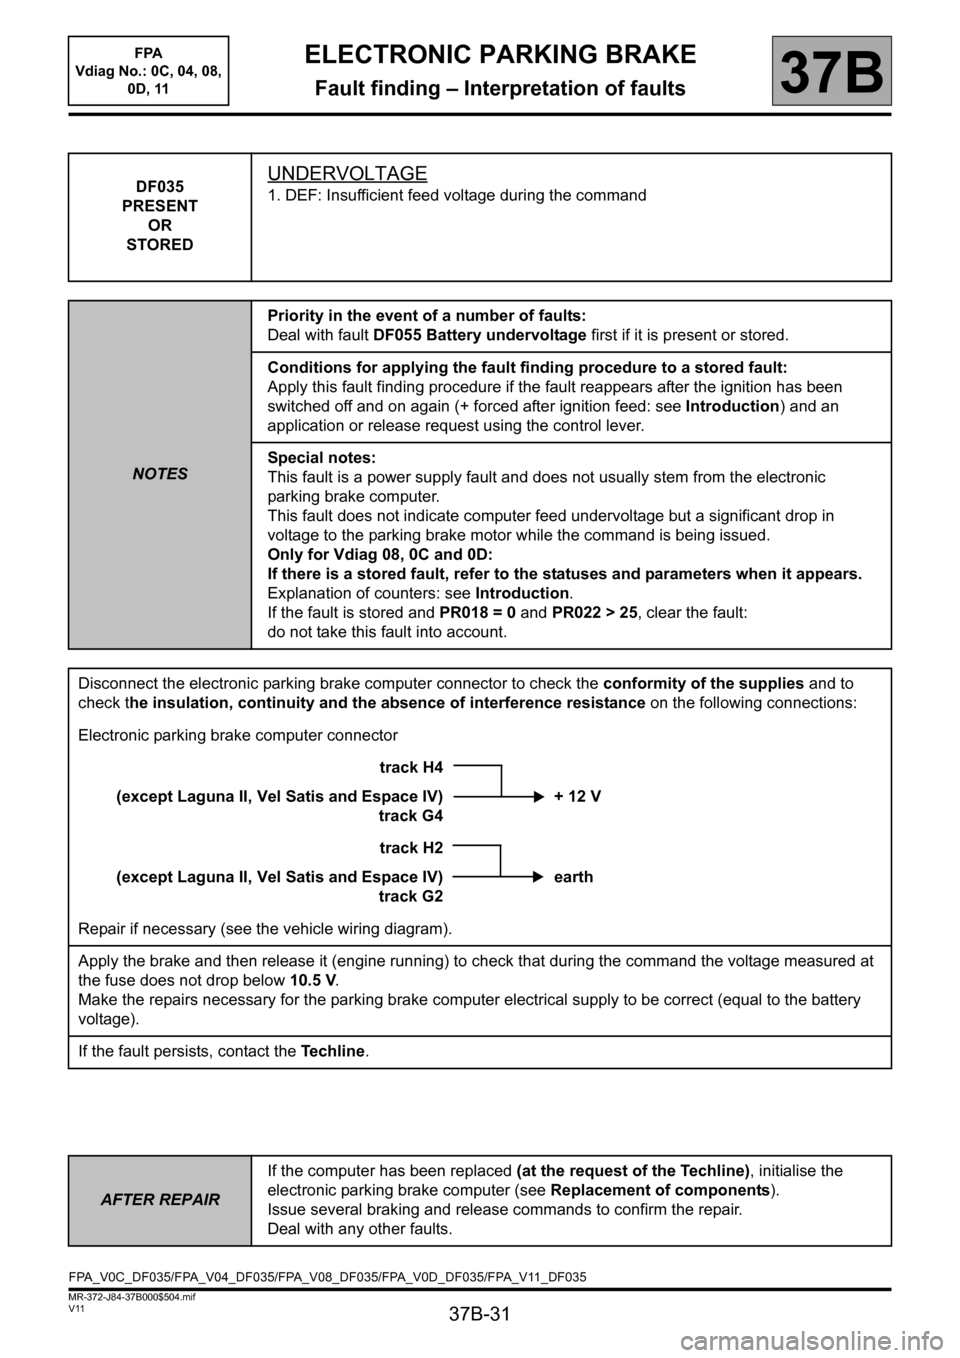 RENAULT SCENIC 2013 J95 / 3.G Electronic Parking Brake Workshop Manual 37B-31
MR-372-J84-37B000$504.mif
V11
ELECTRONIC PARKING BRAKE
Fault finding – Interpretation of faults
FPA  
Vdiag No.: 0C, 04, 08, 
0D, 11
37B
DF035
PRESENT
OR
STOREDUNDERVOLTAGE
1. DEF: Insufficie